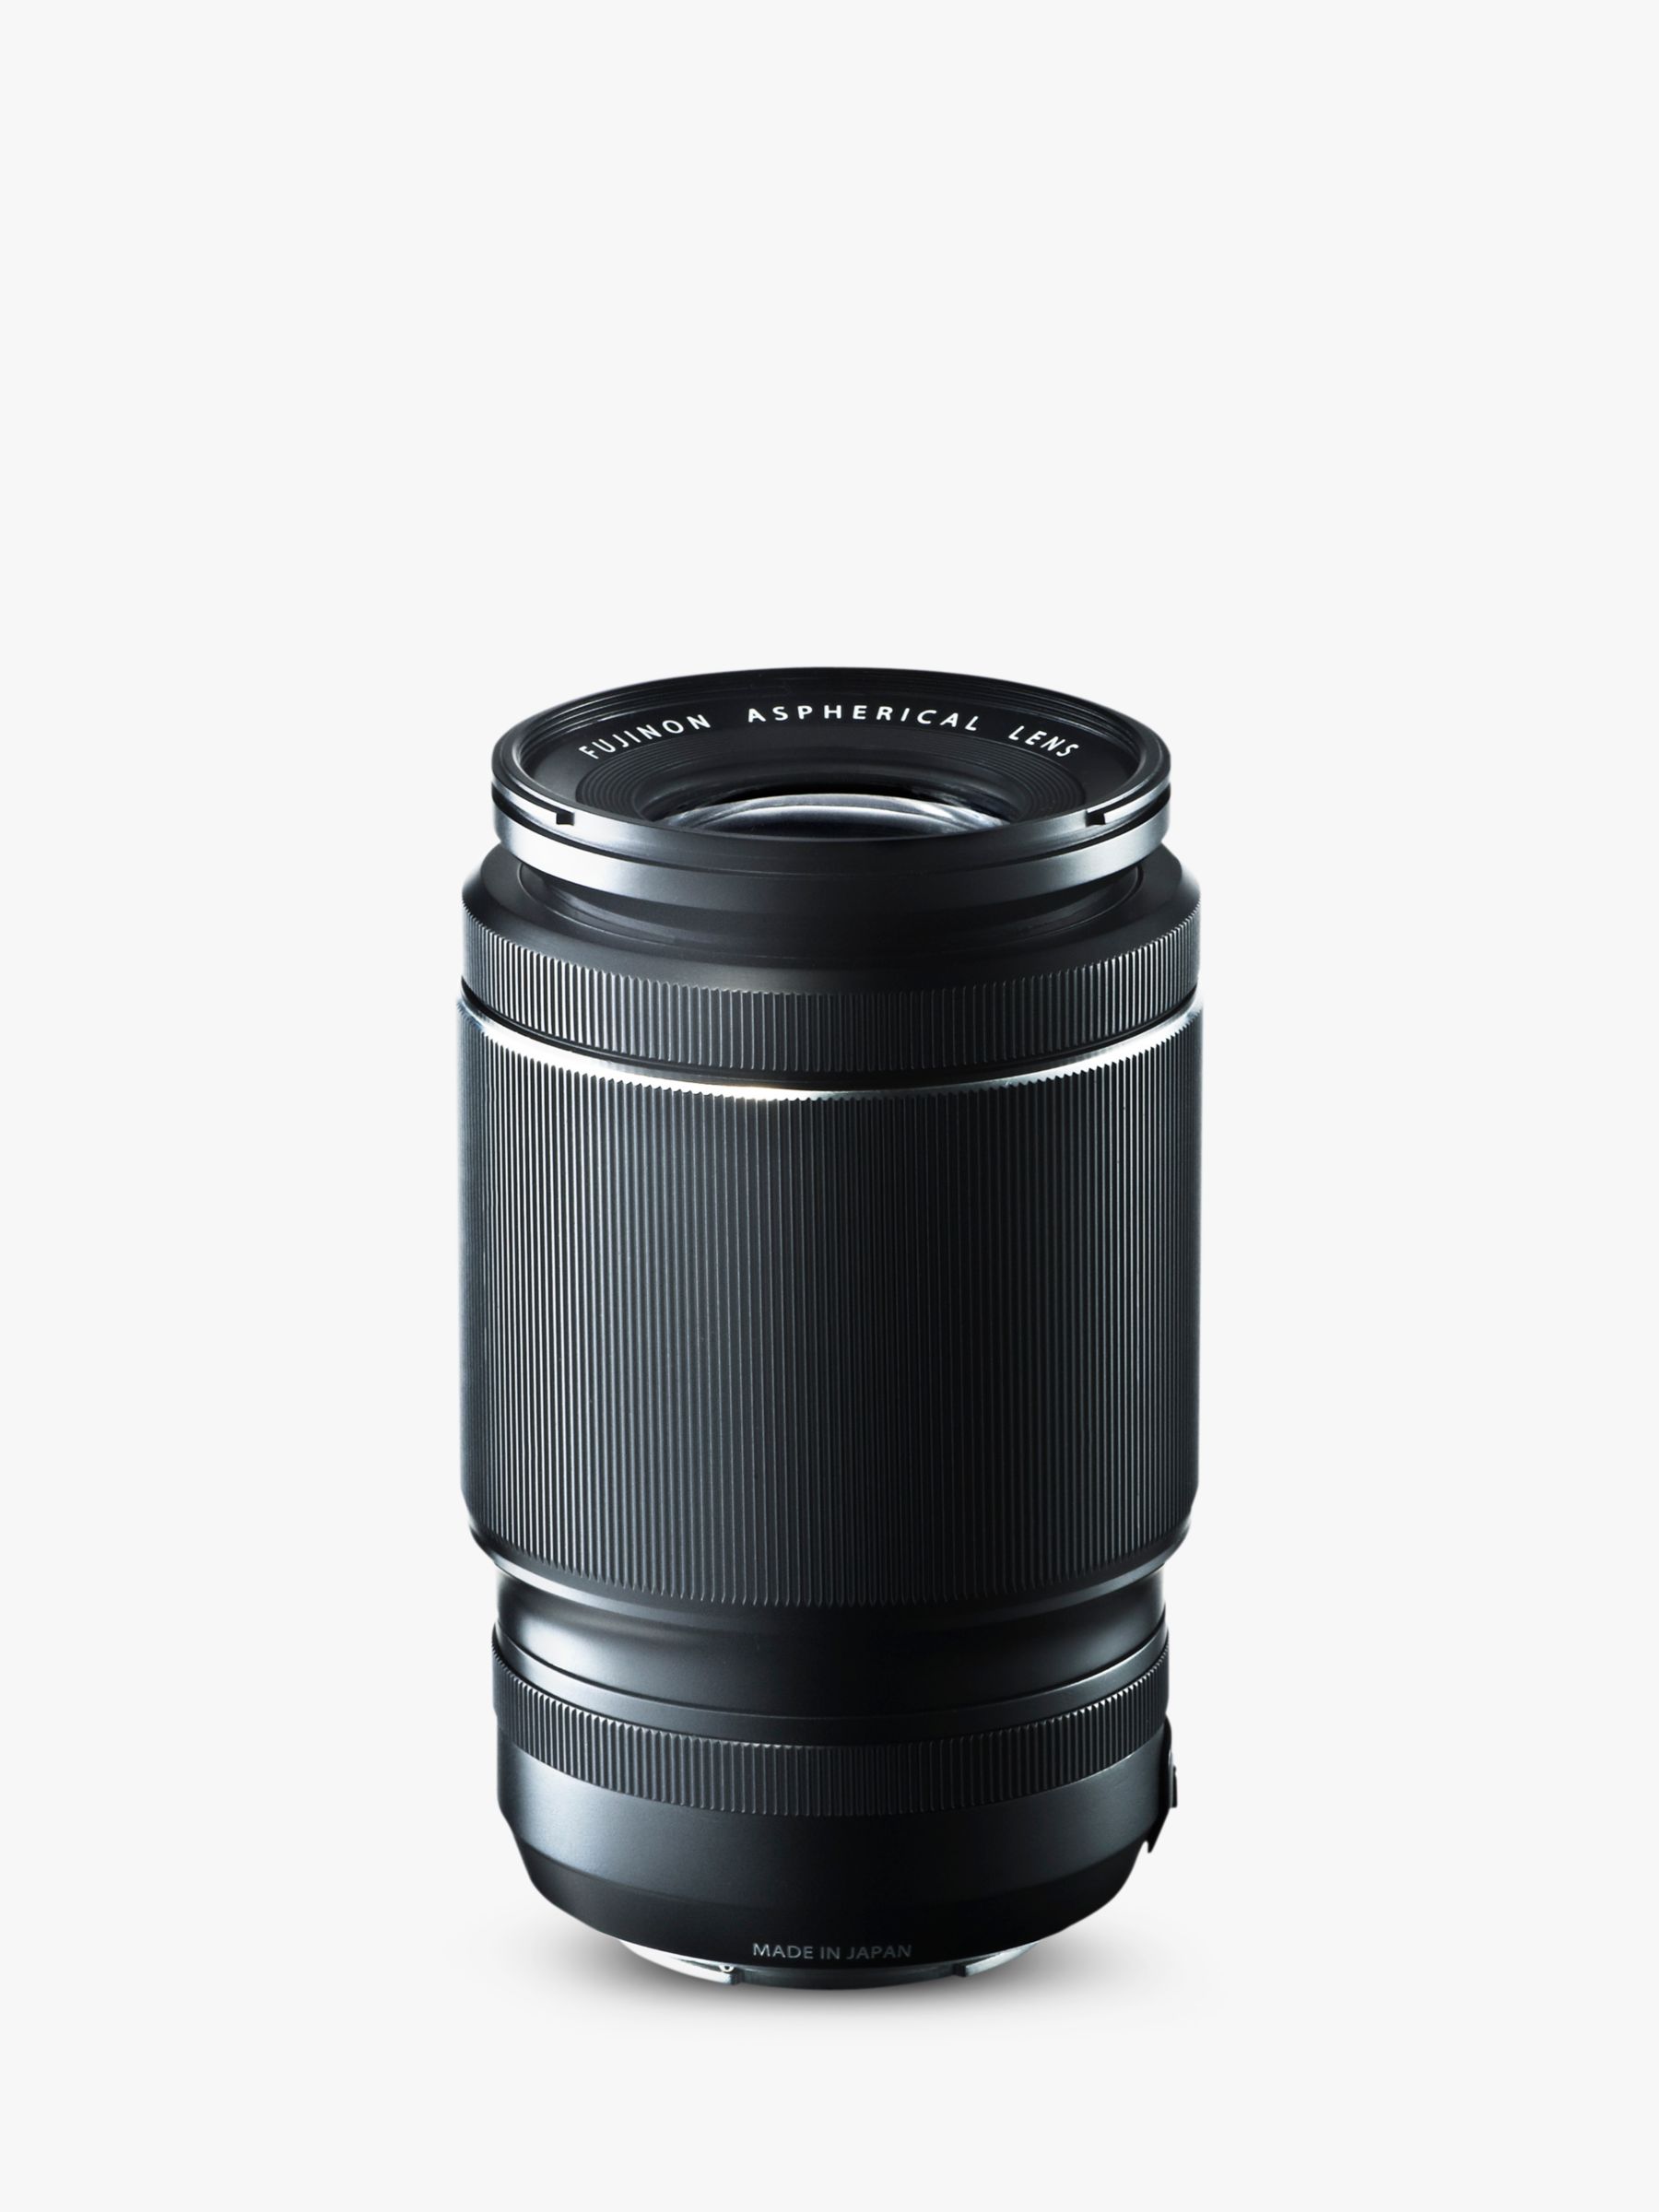 Image of Fujifilm XF55200mm f3548 R LM OIS Fujinon Telephoto Lens